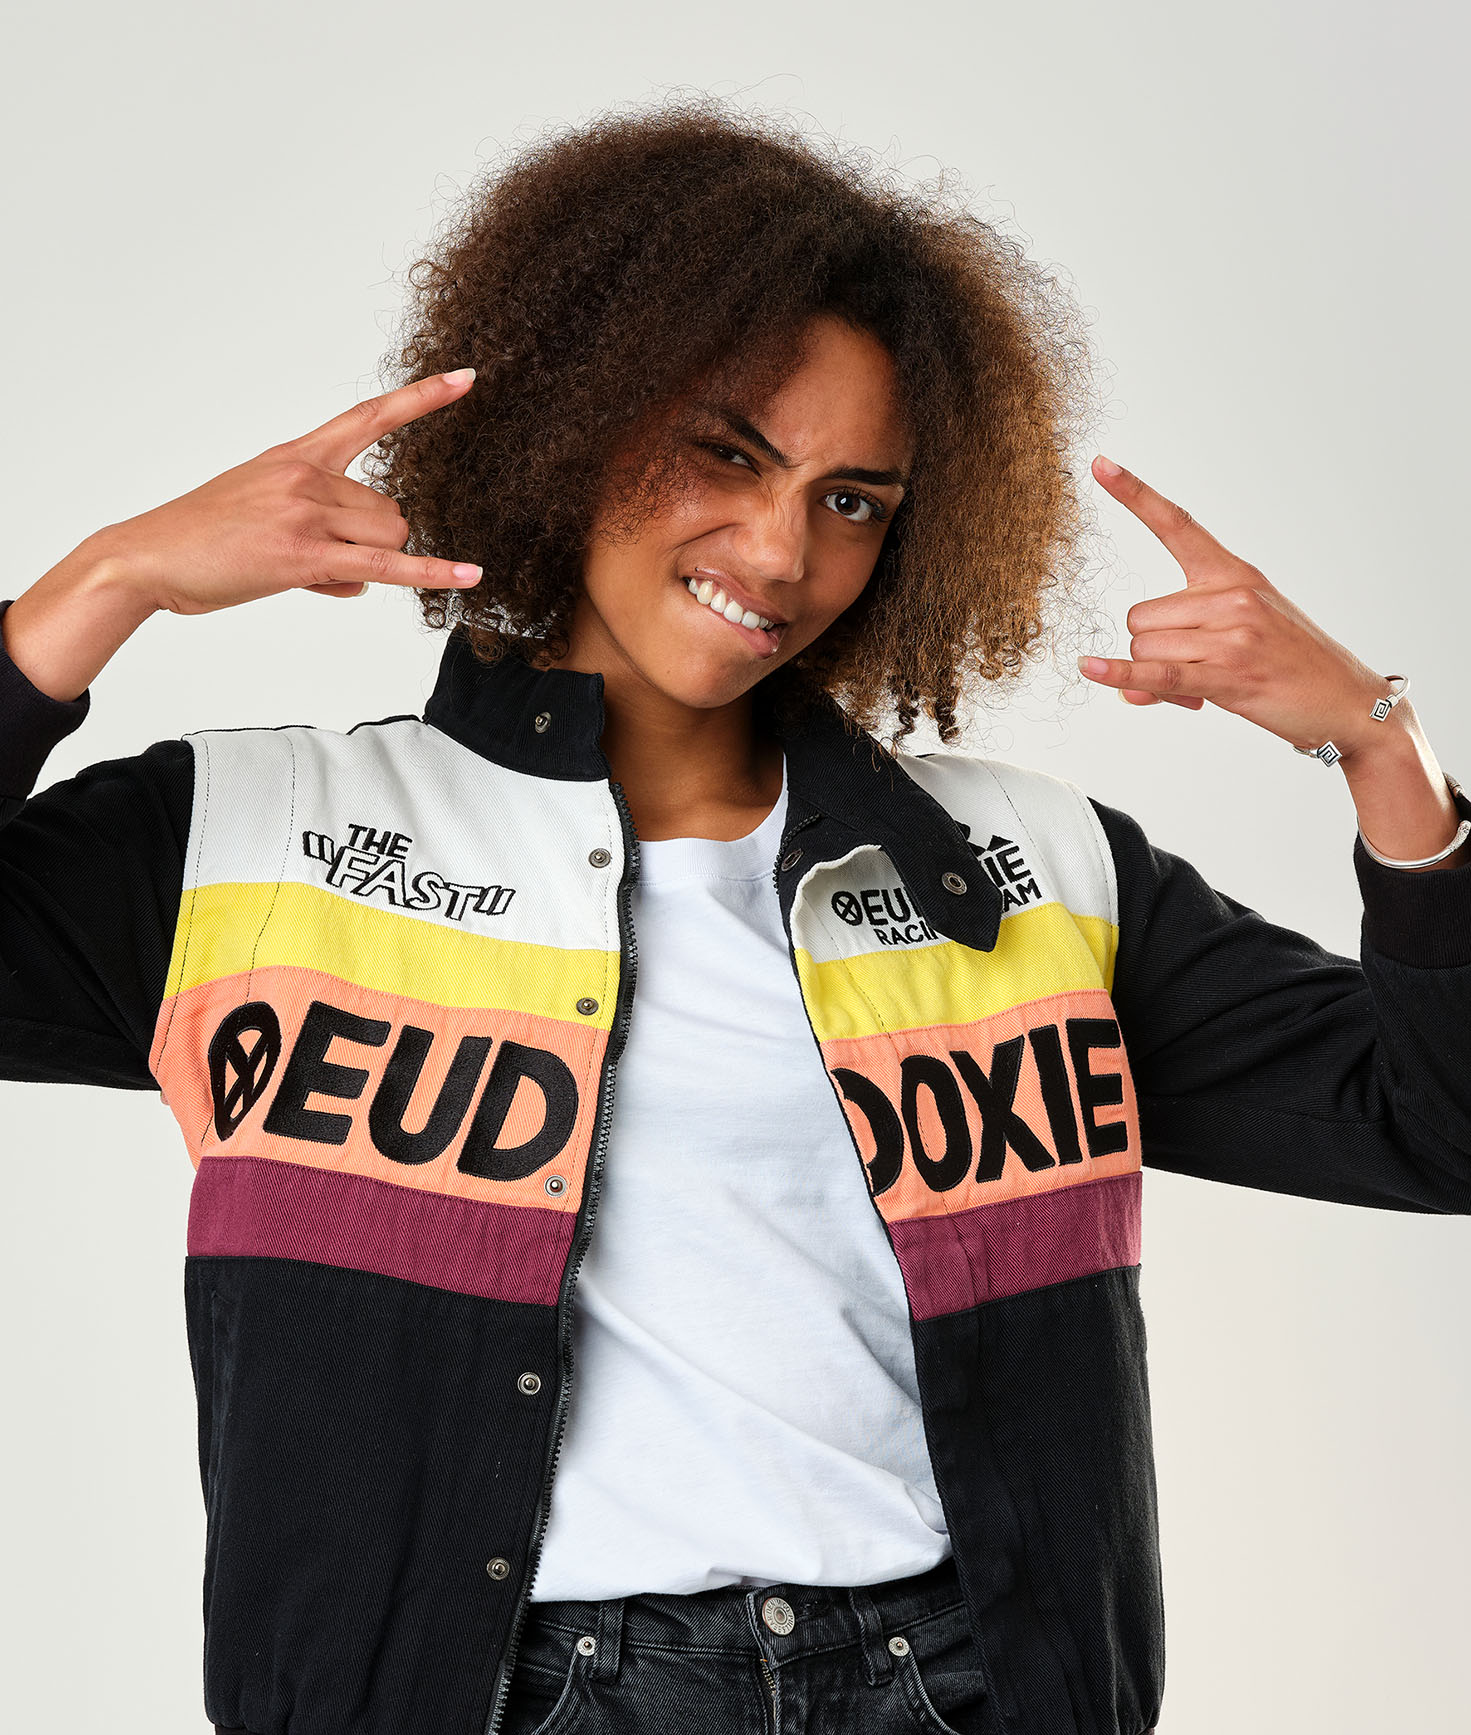 eudoxie-jacket-nascar-racing-femme-veste-rock-fun-coloré-brodé-1.jpg